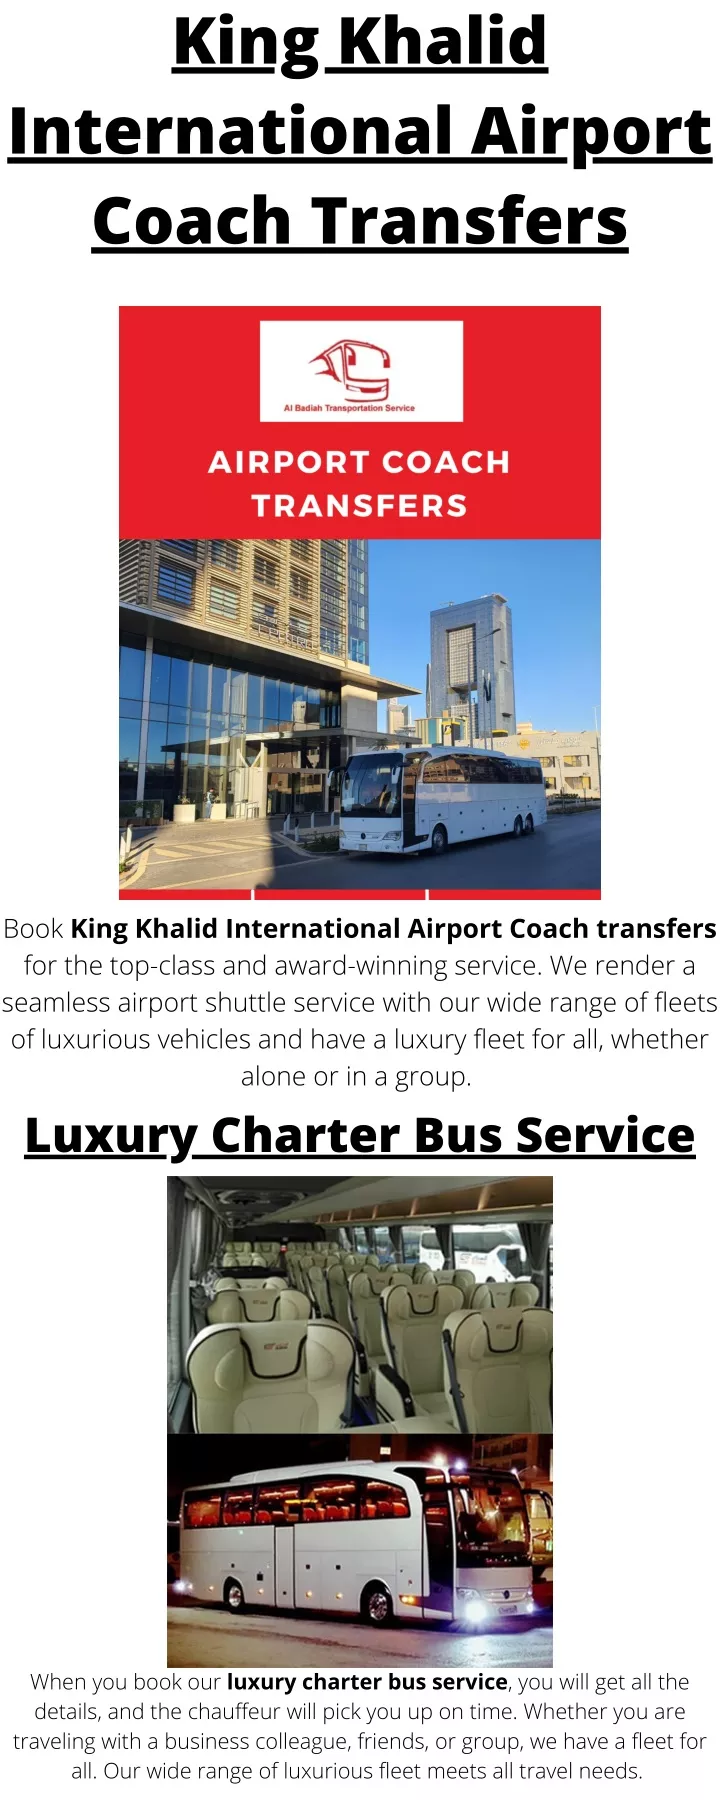 king khalid international airport coach transfers